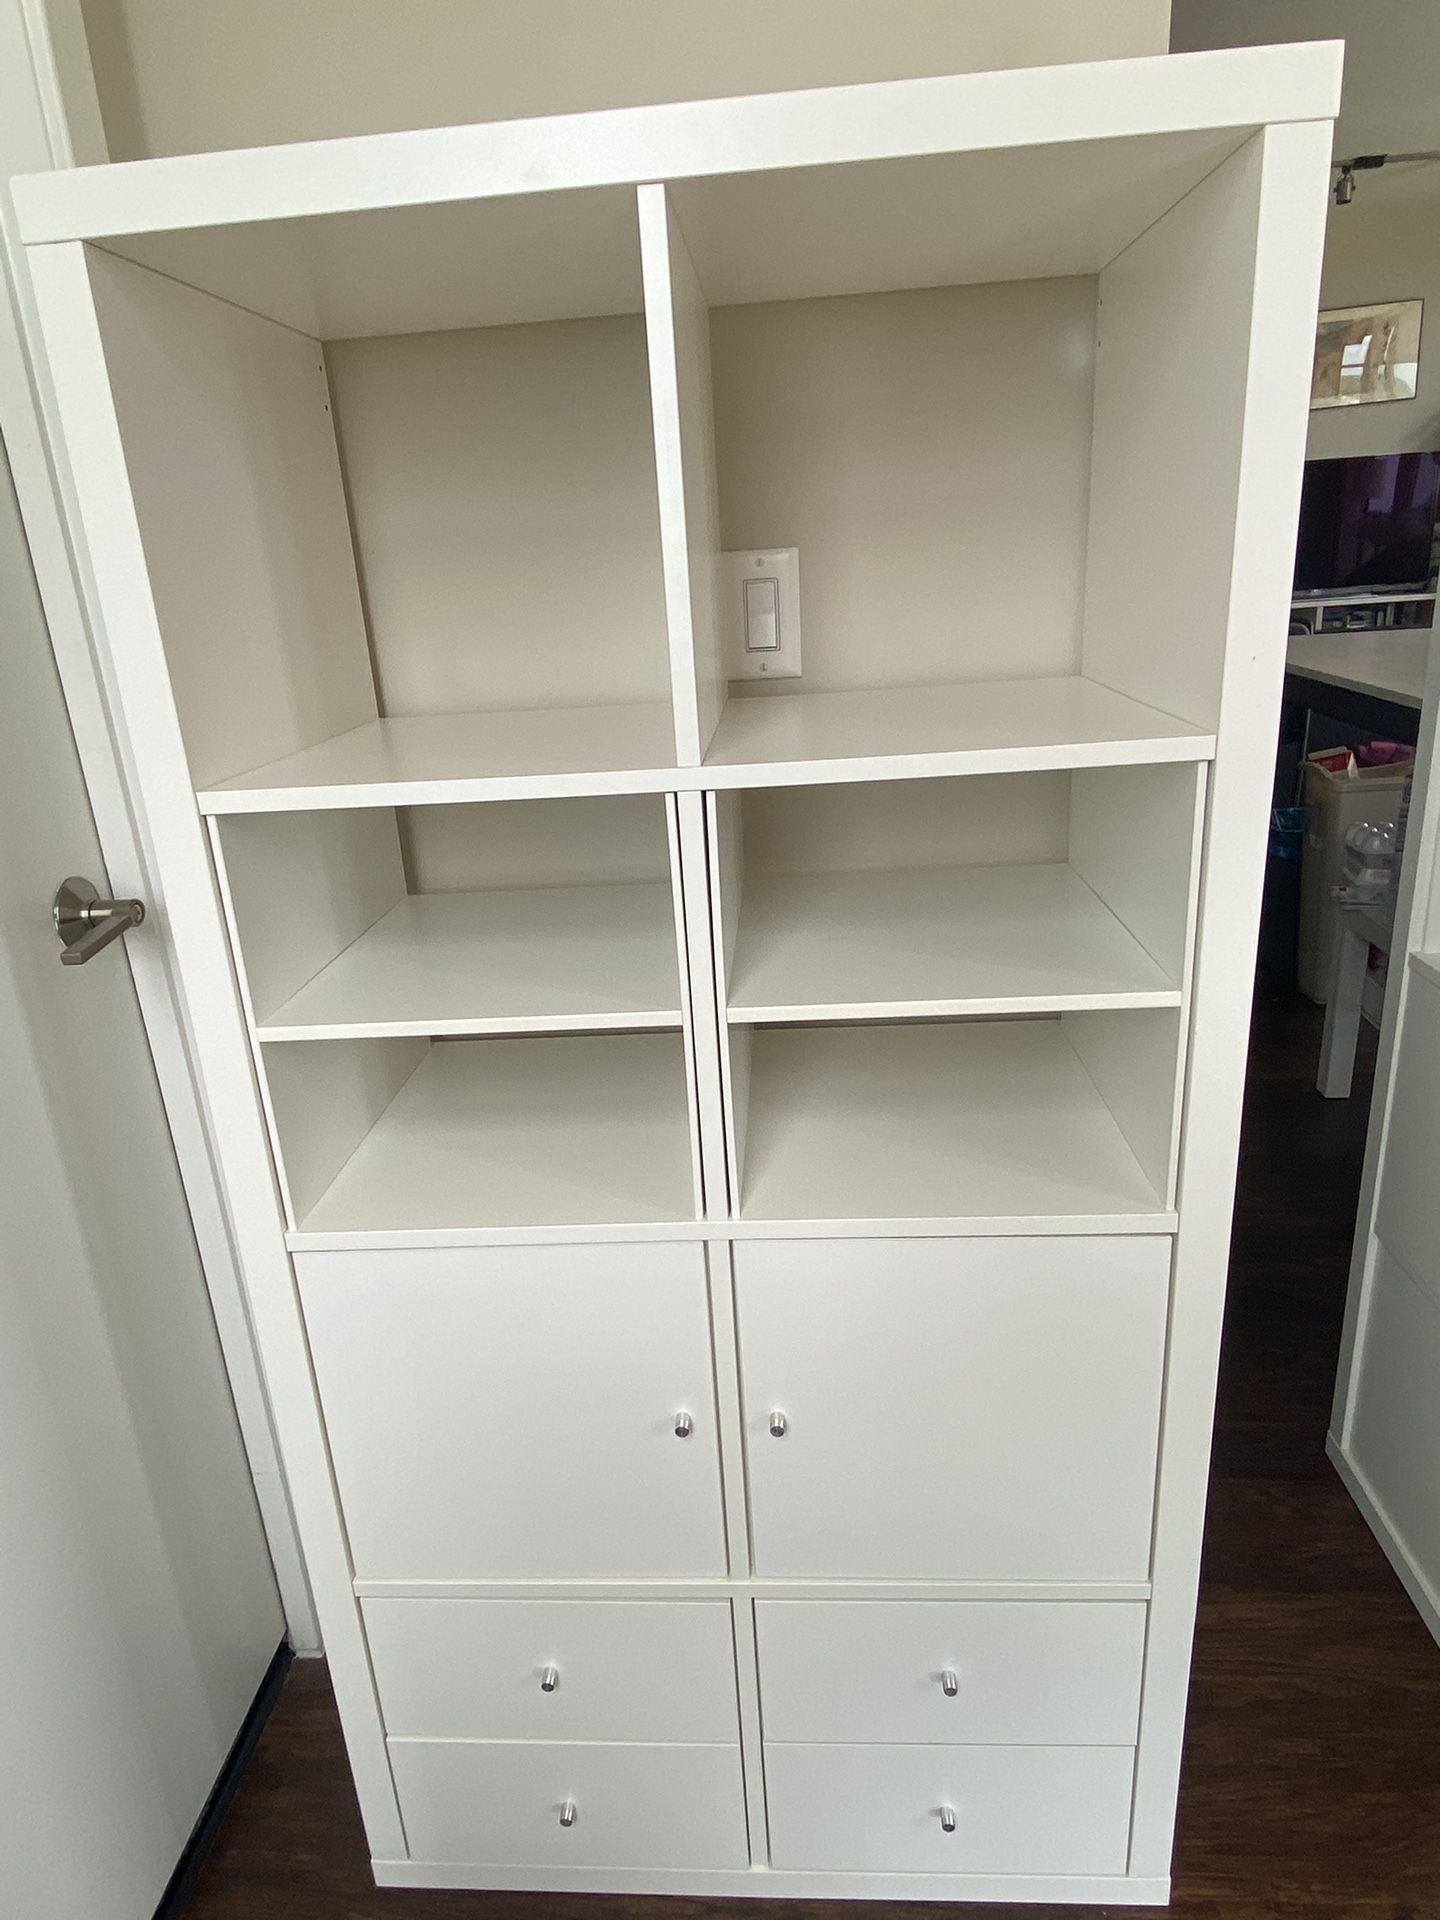 IKEA Kallax Shelf Unit With Door, Drawer and Shelf Inserts